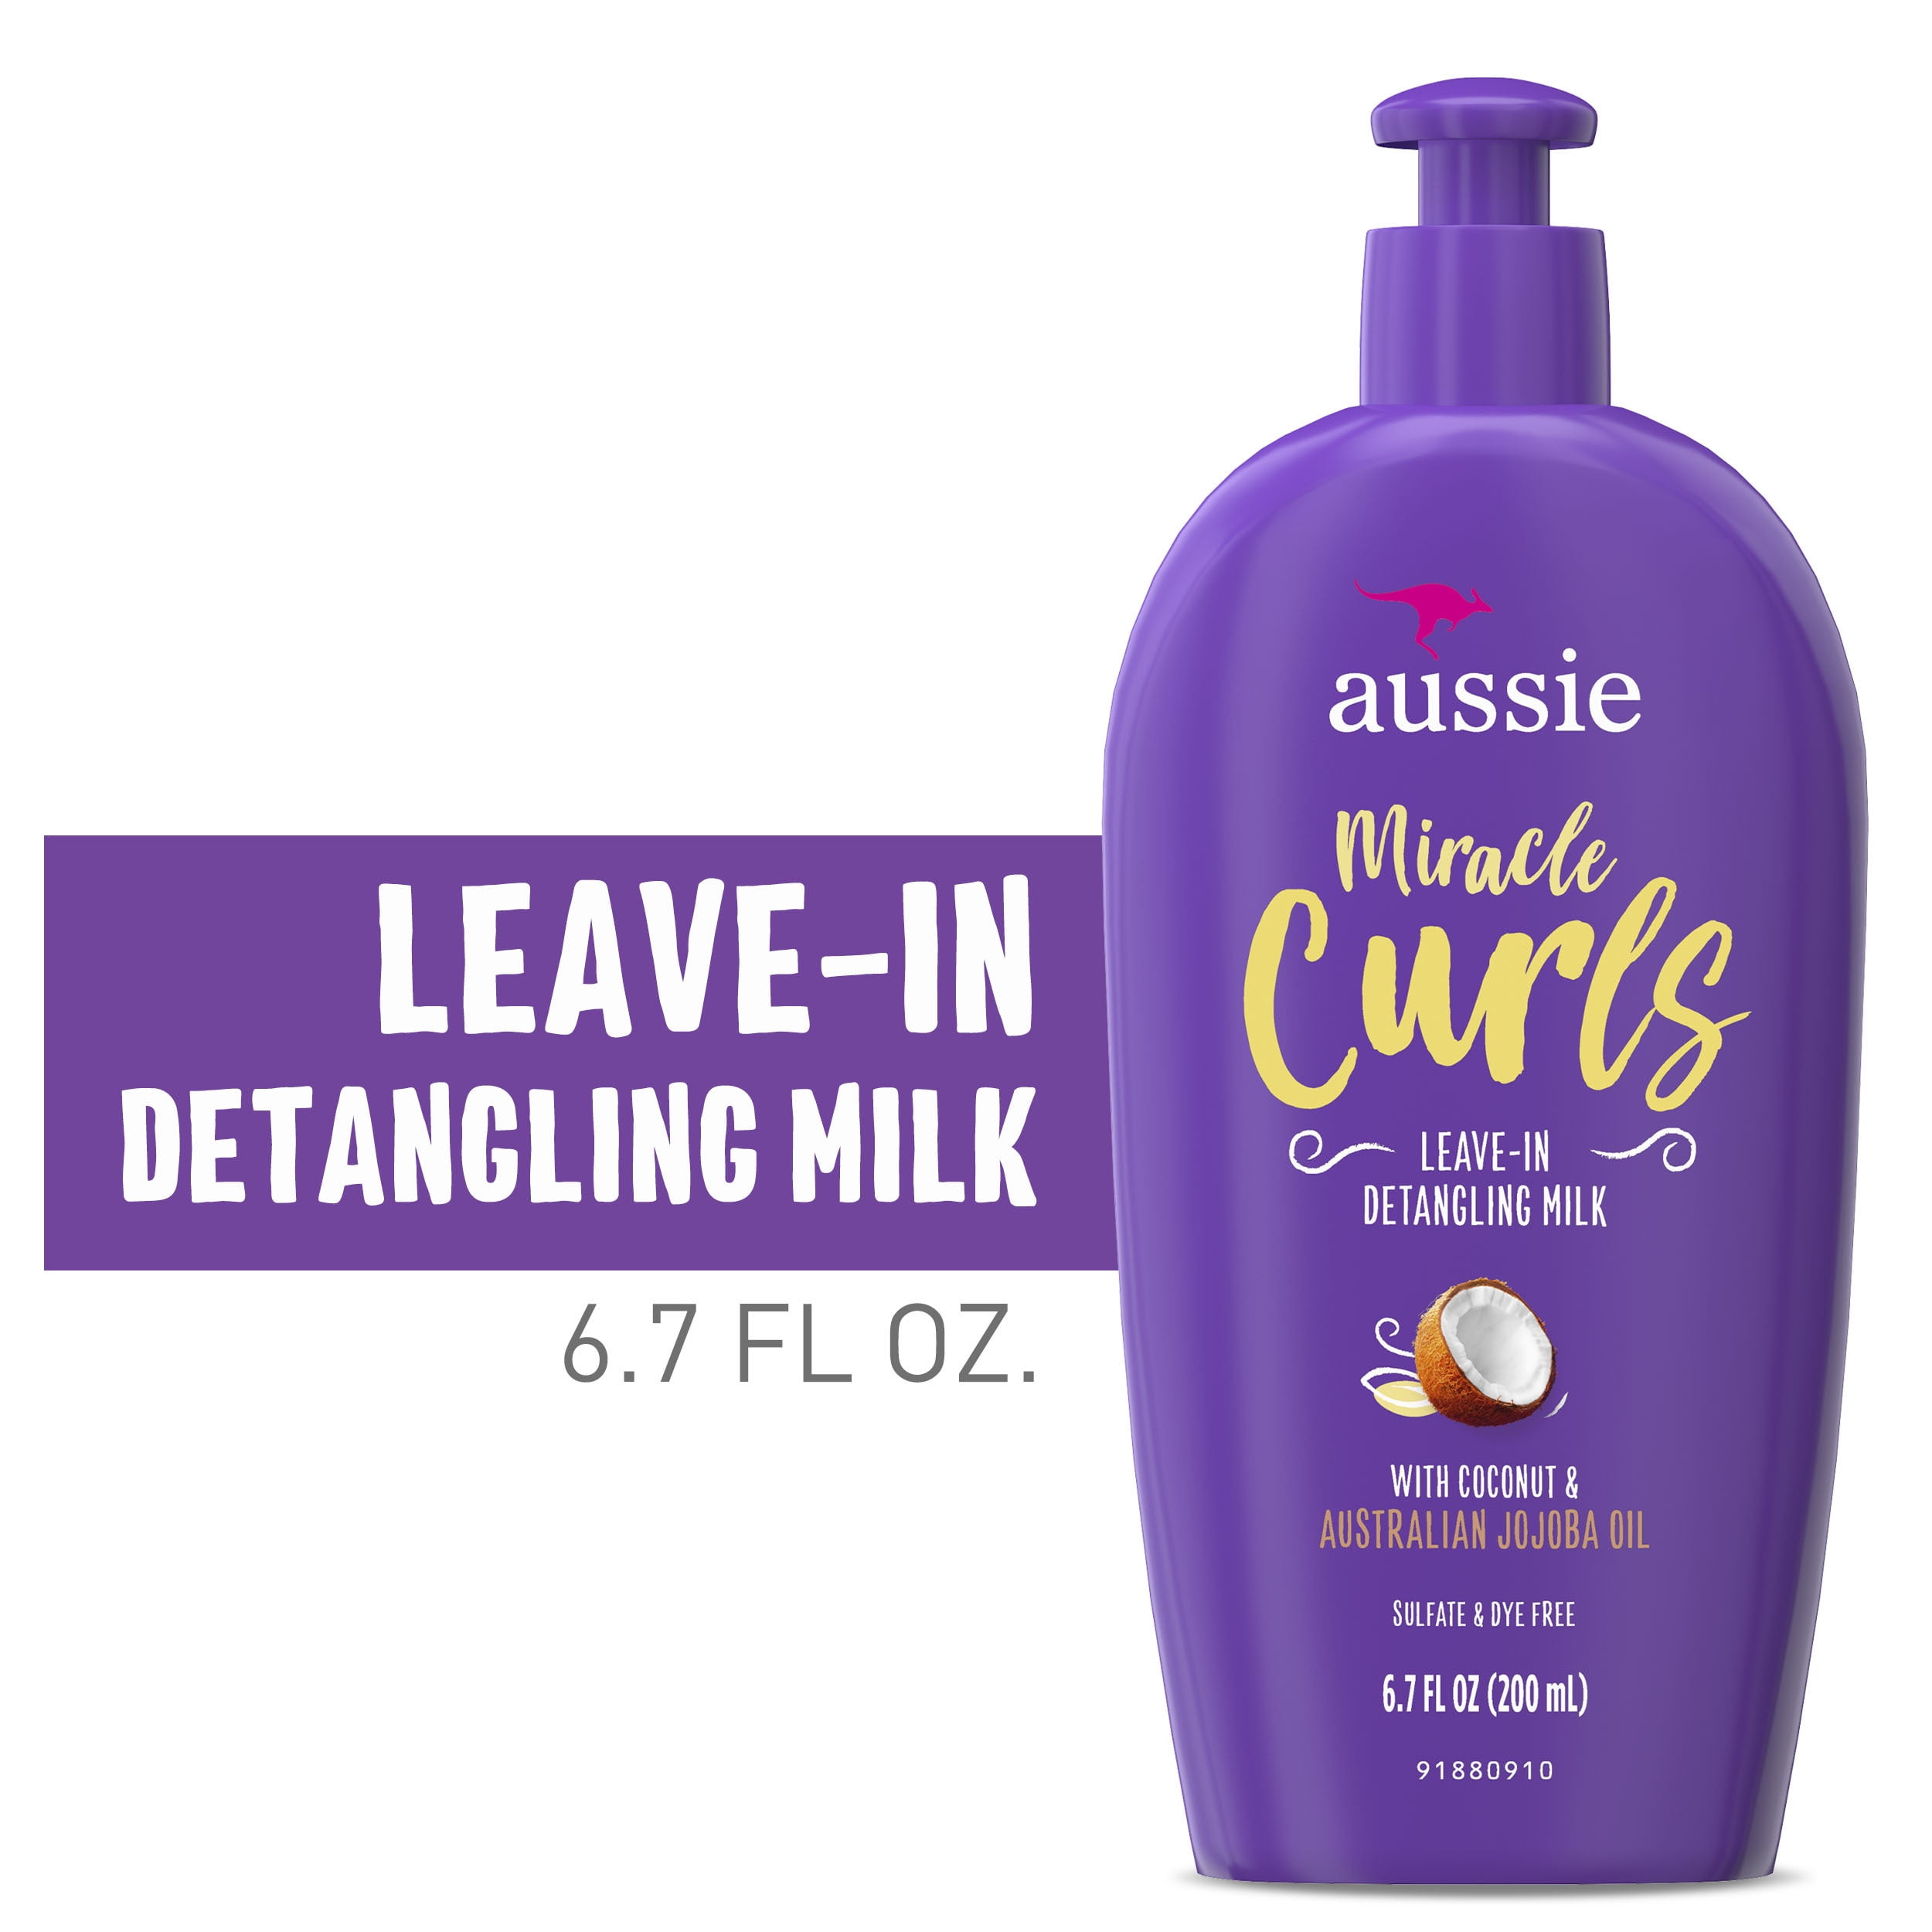 Aussie Miracle Curls Leave-In Detangling Milk, Paraben Free,  oz -  